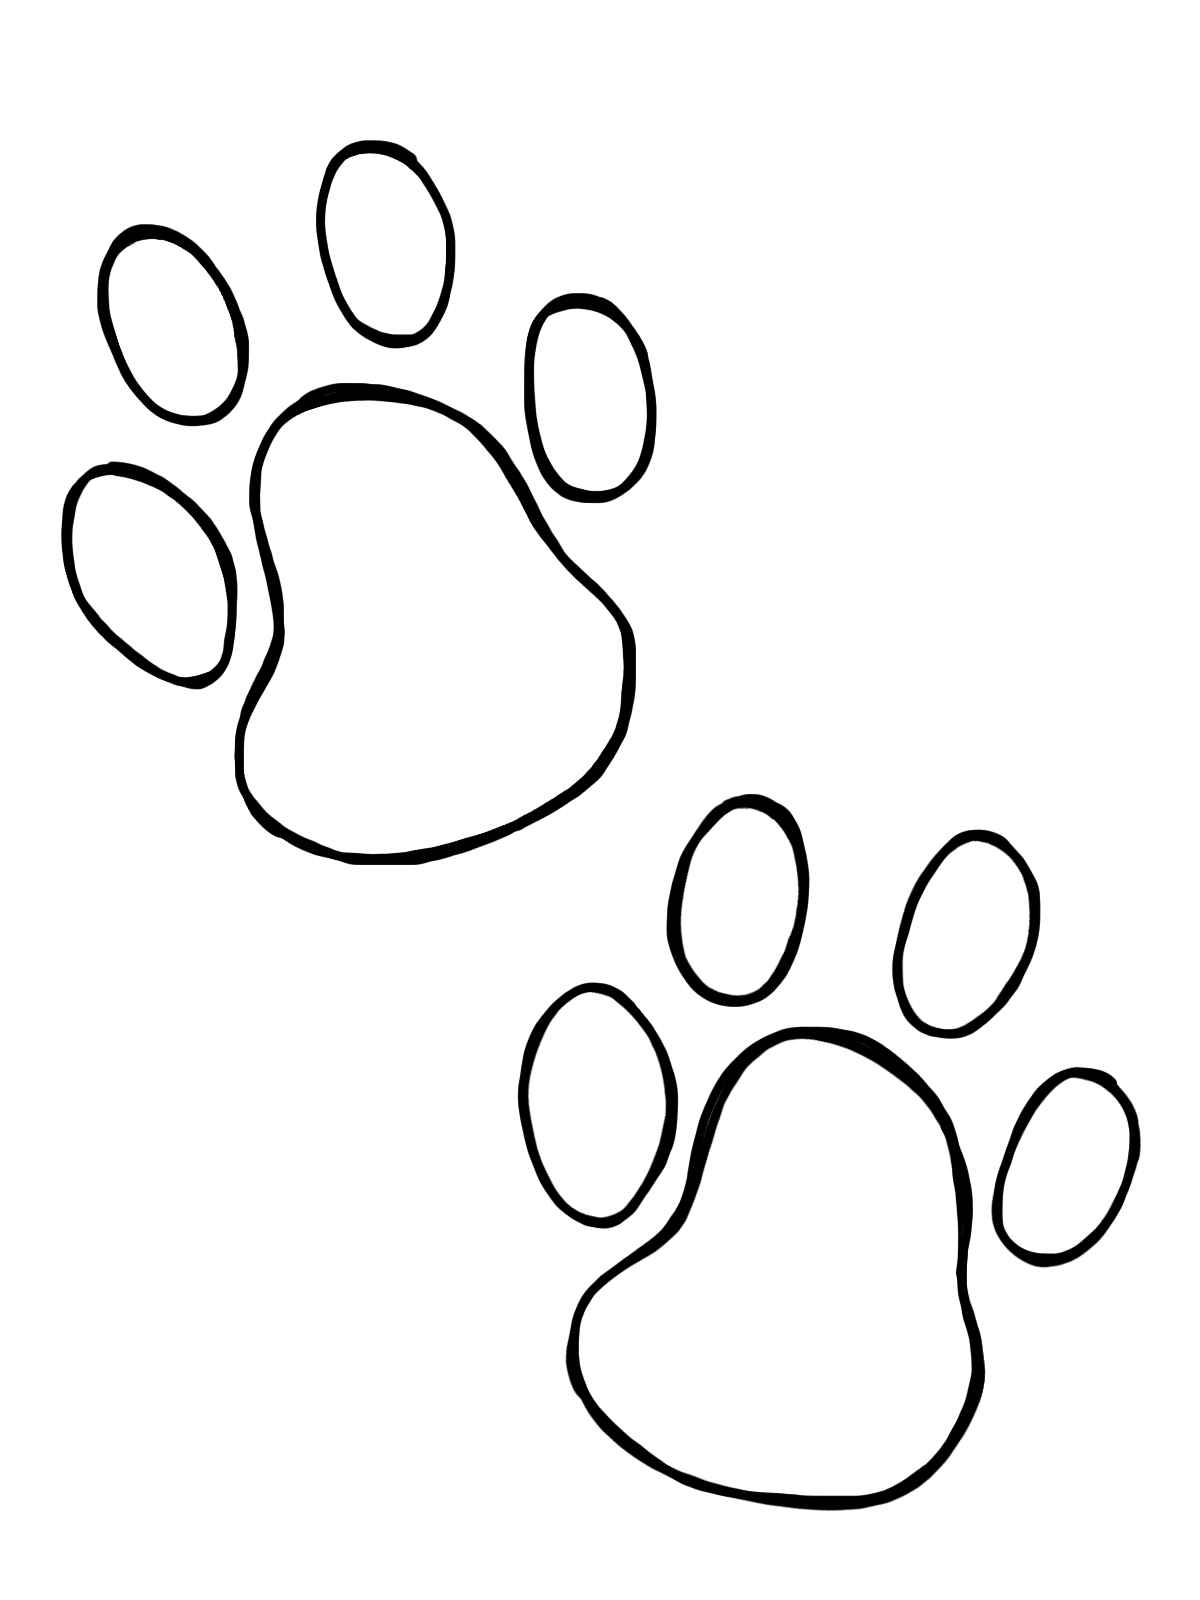 Dog paw paw print clip art border clipart